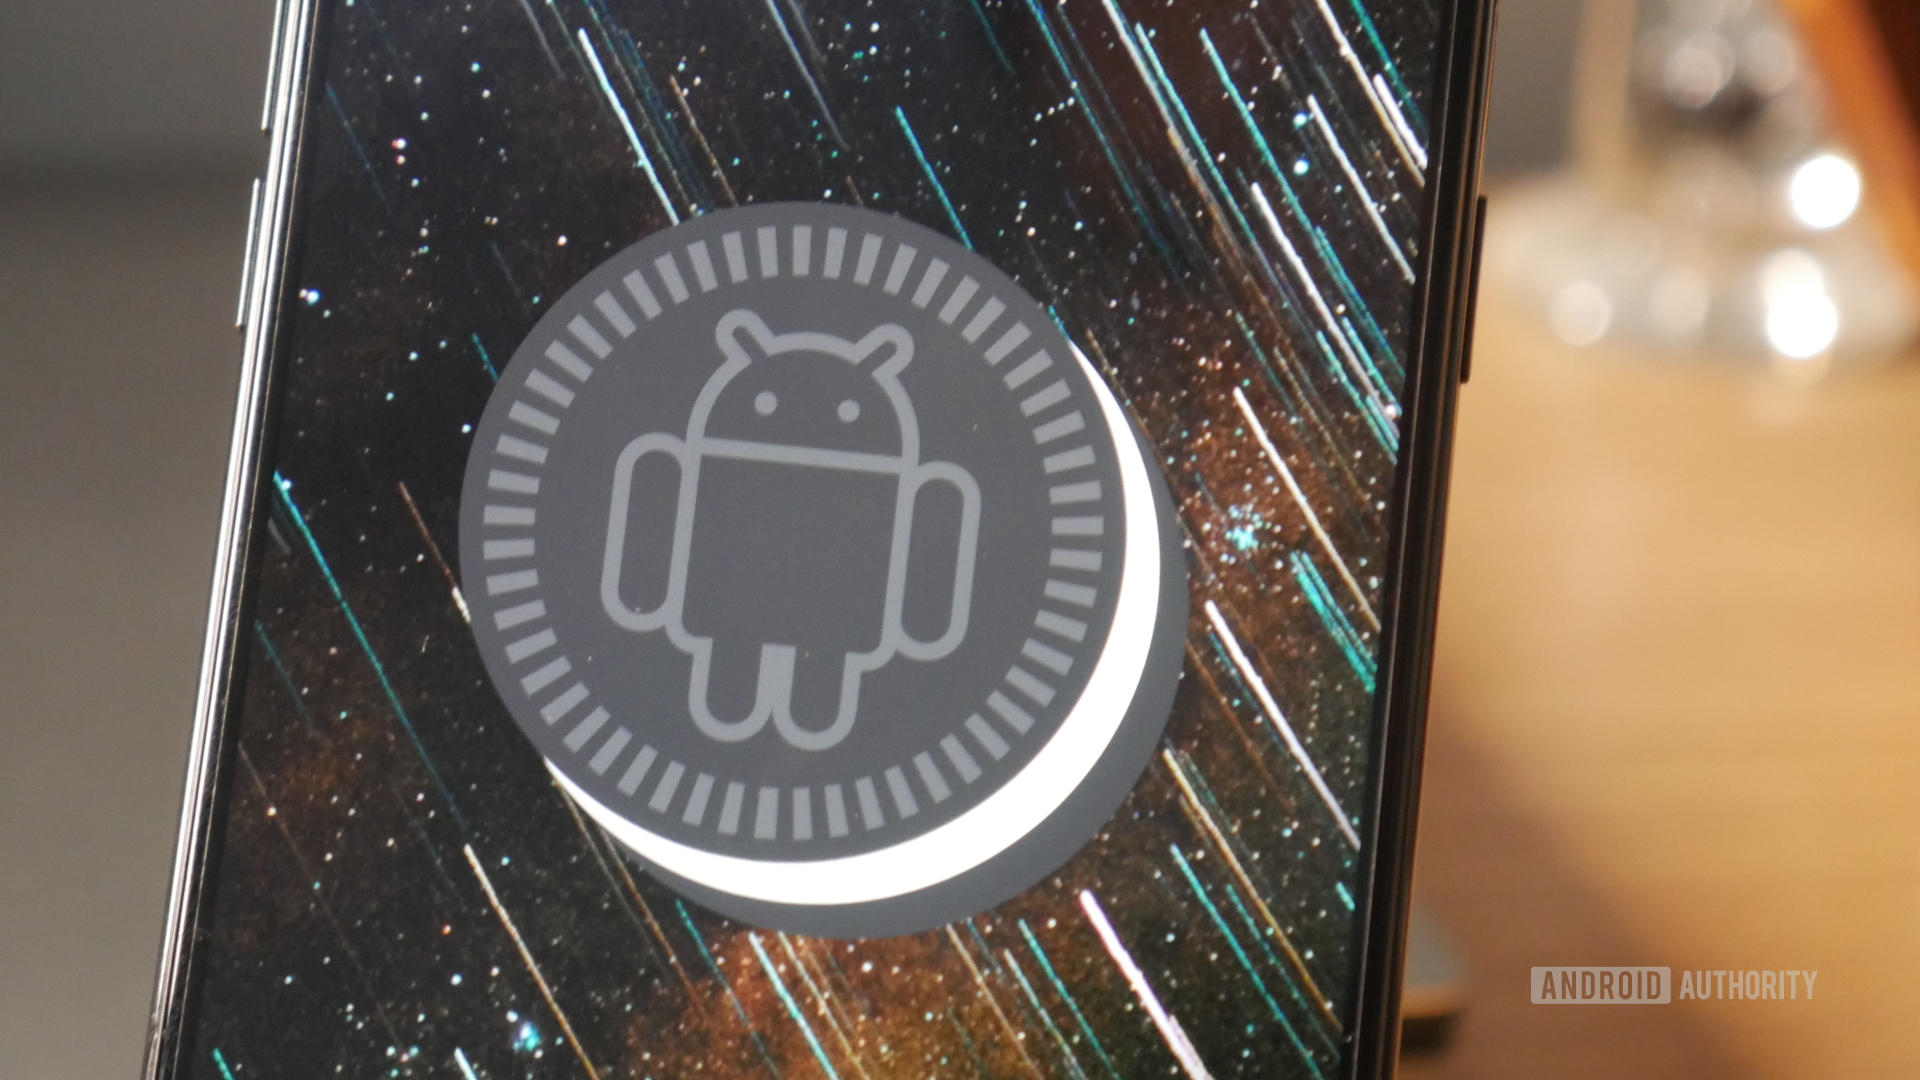 Realme 1 Android 8 Oreo